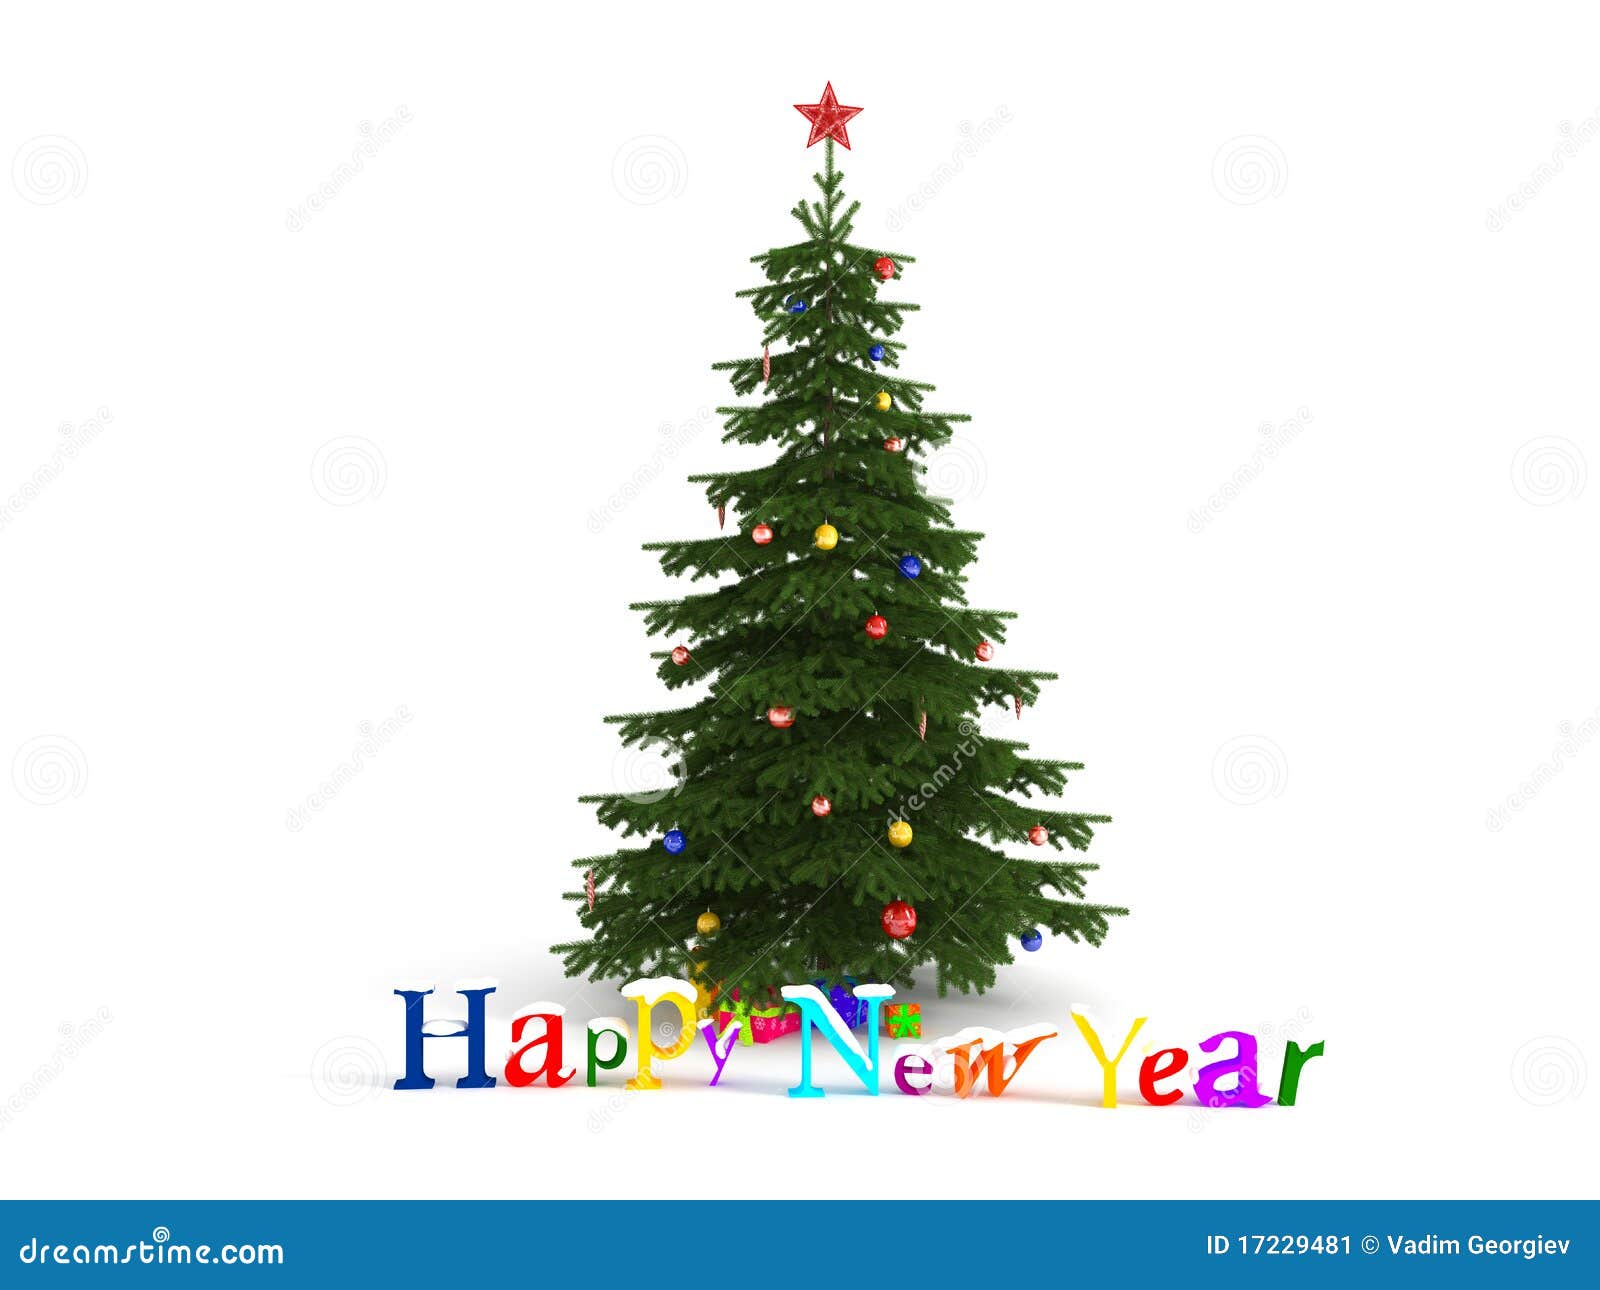 Happy New Year Christmas Tree Stock Image - Image: 17229481